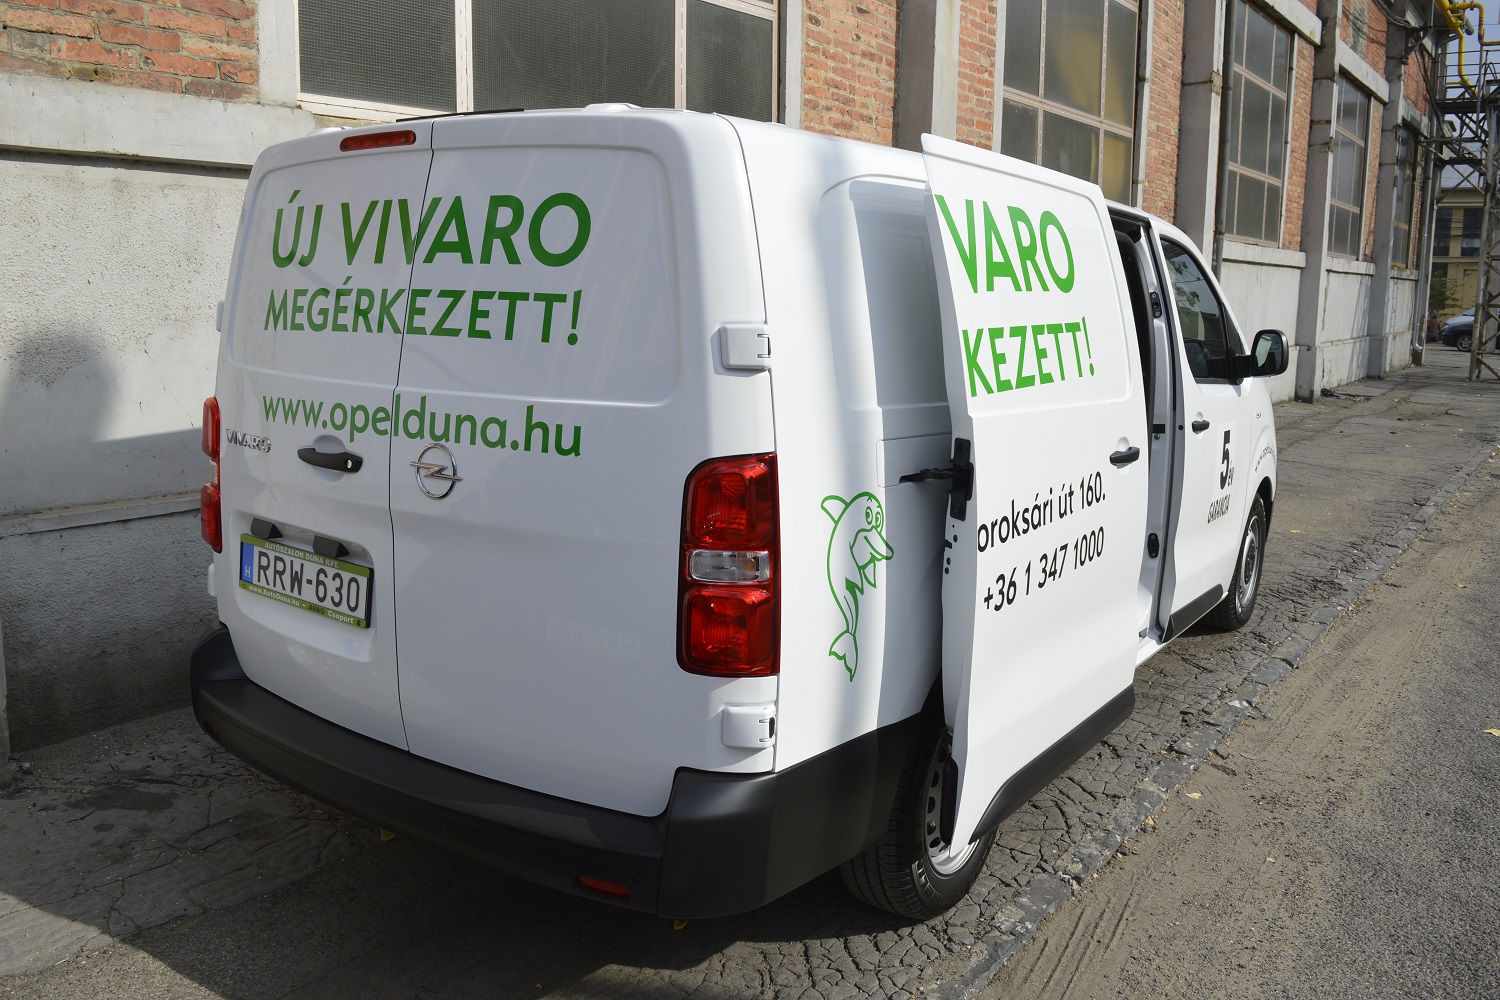 Már magyarul is tud az új Vivaro 3